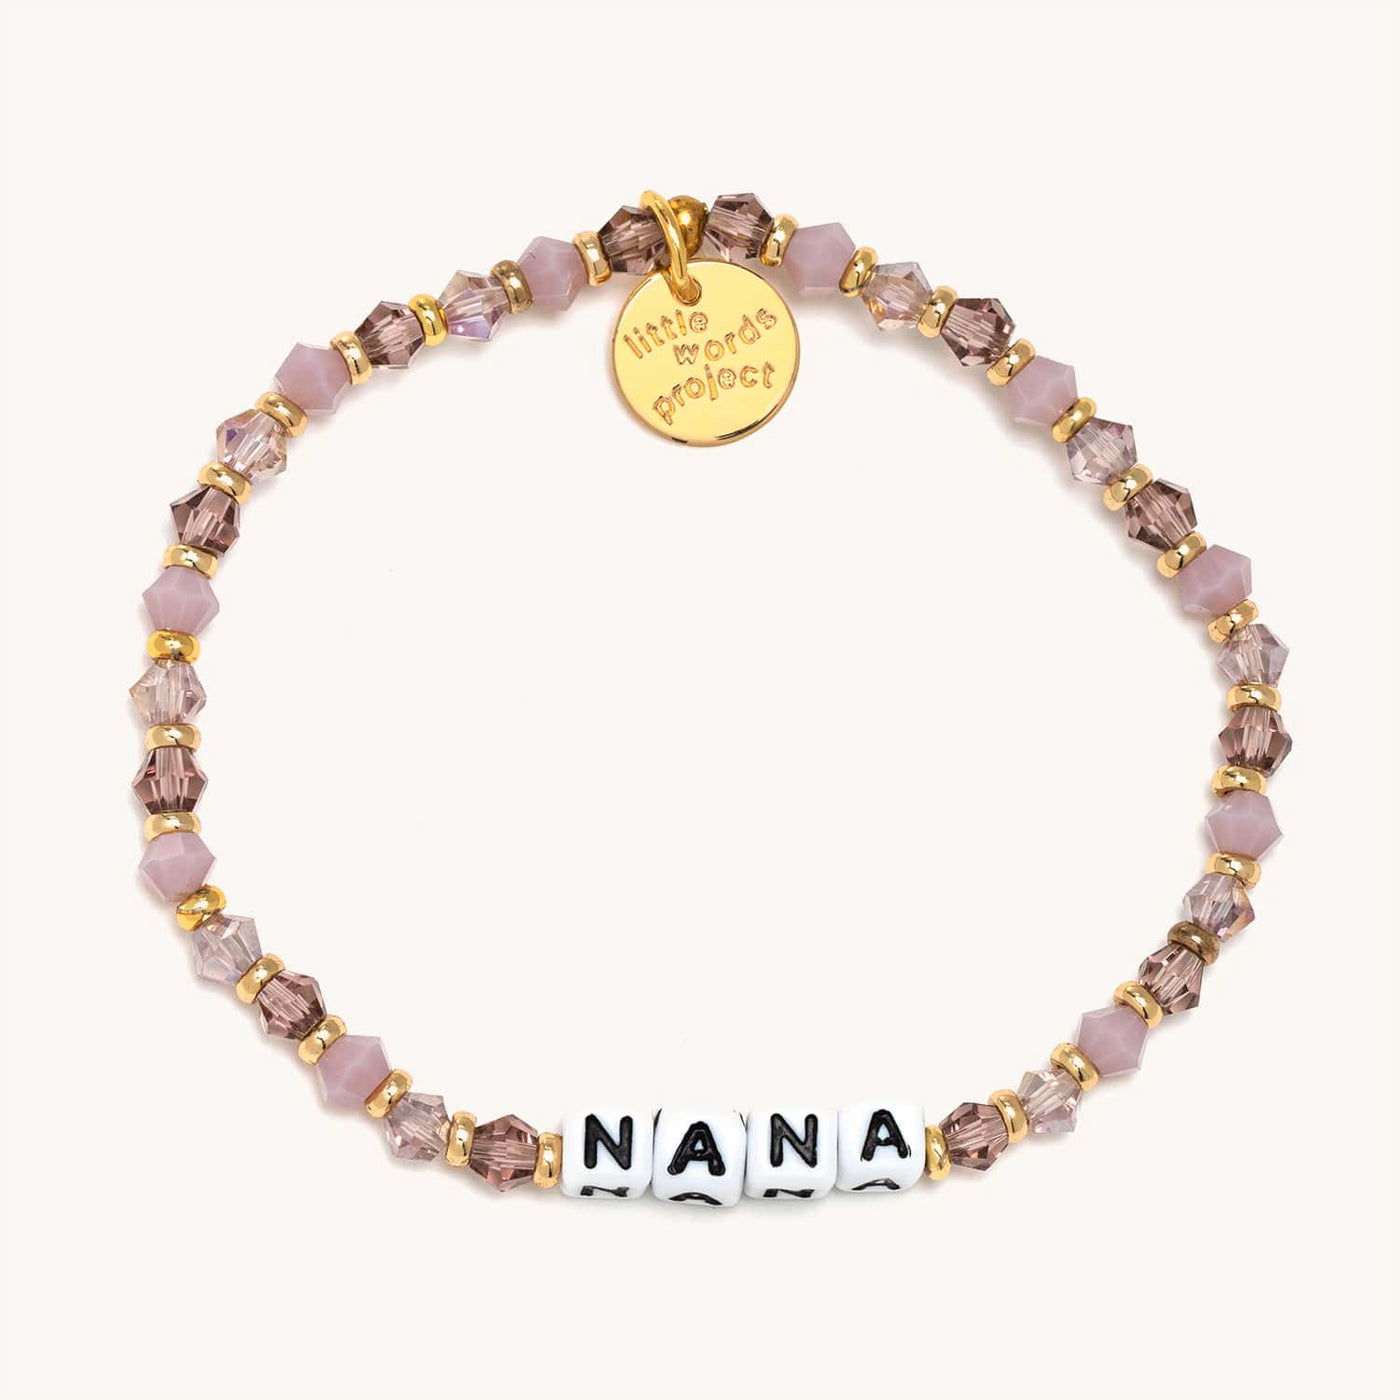 Nana Little words Project Bracelet